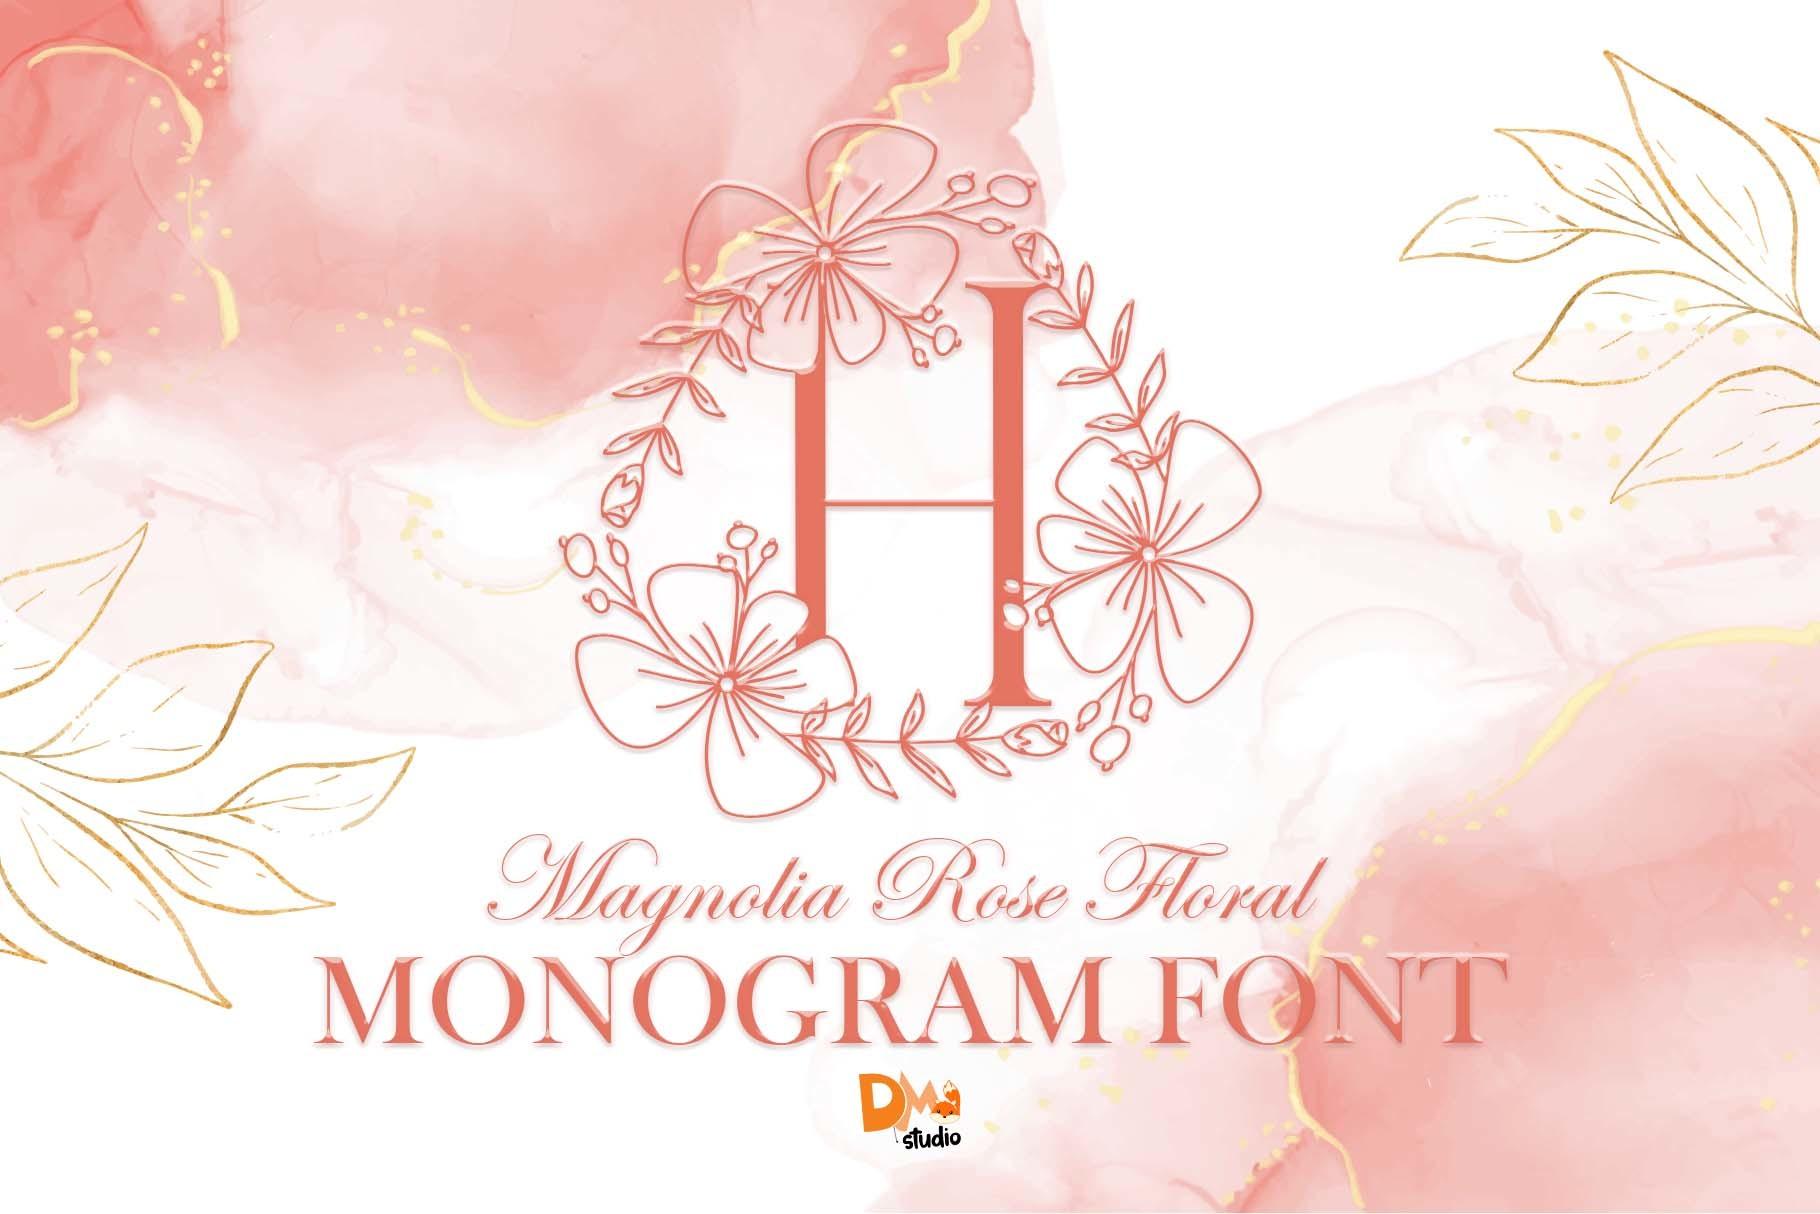 Magnolia Rose Floral Monogram Font